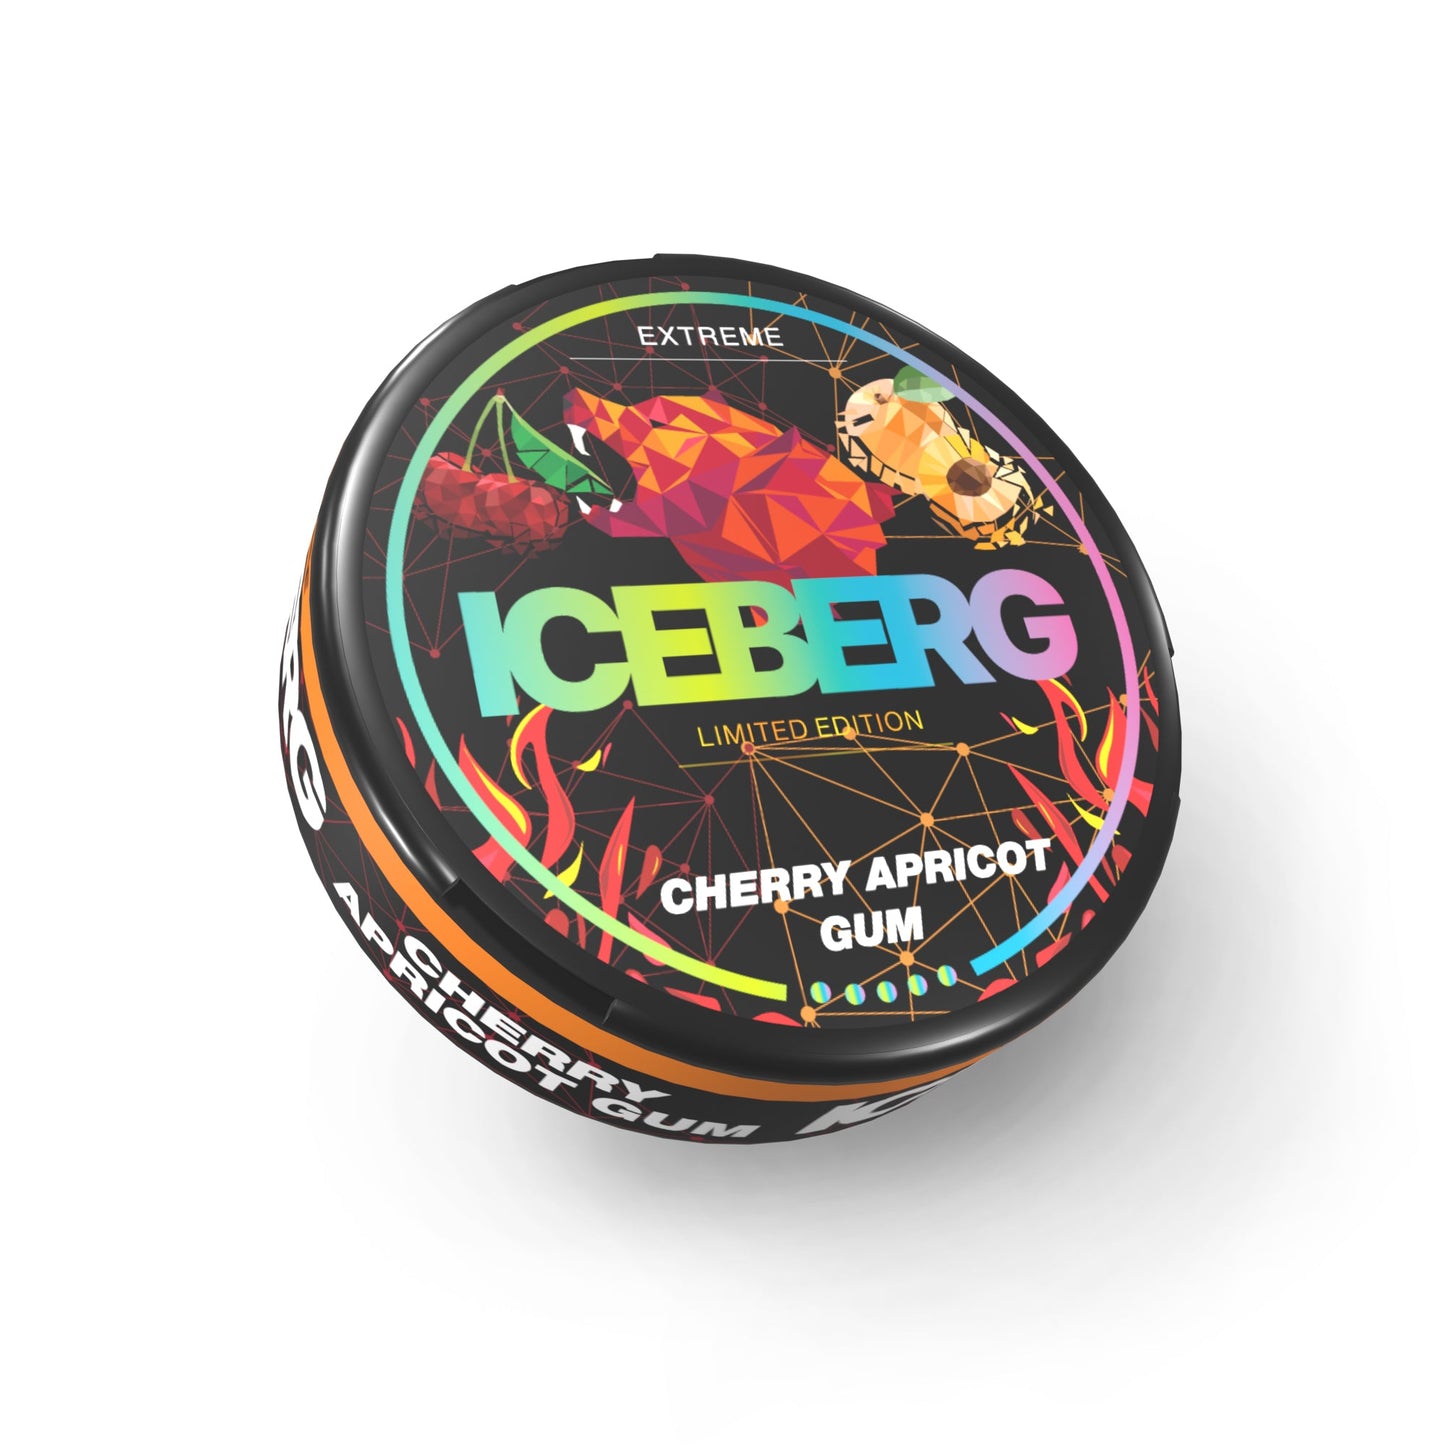 Iceberg Cherry Apricot Gum Limited Edition 130mg